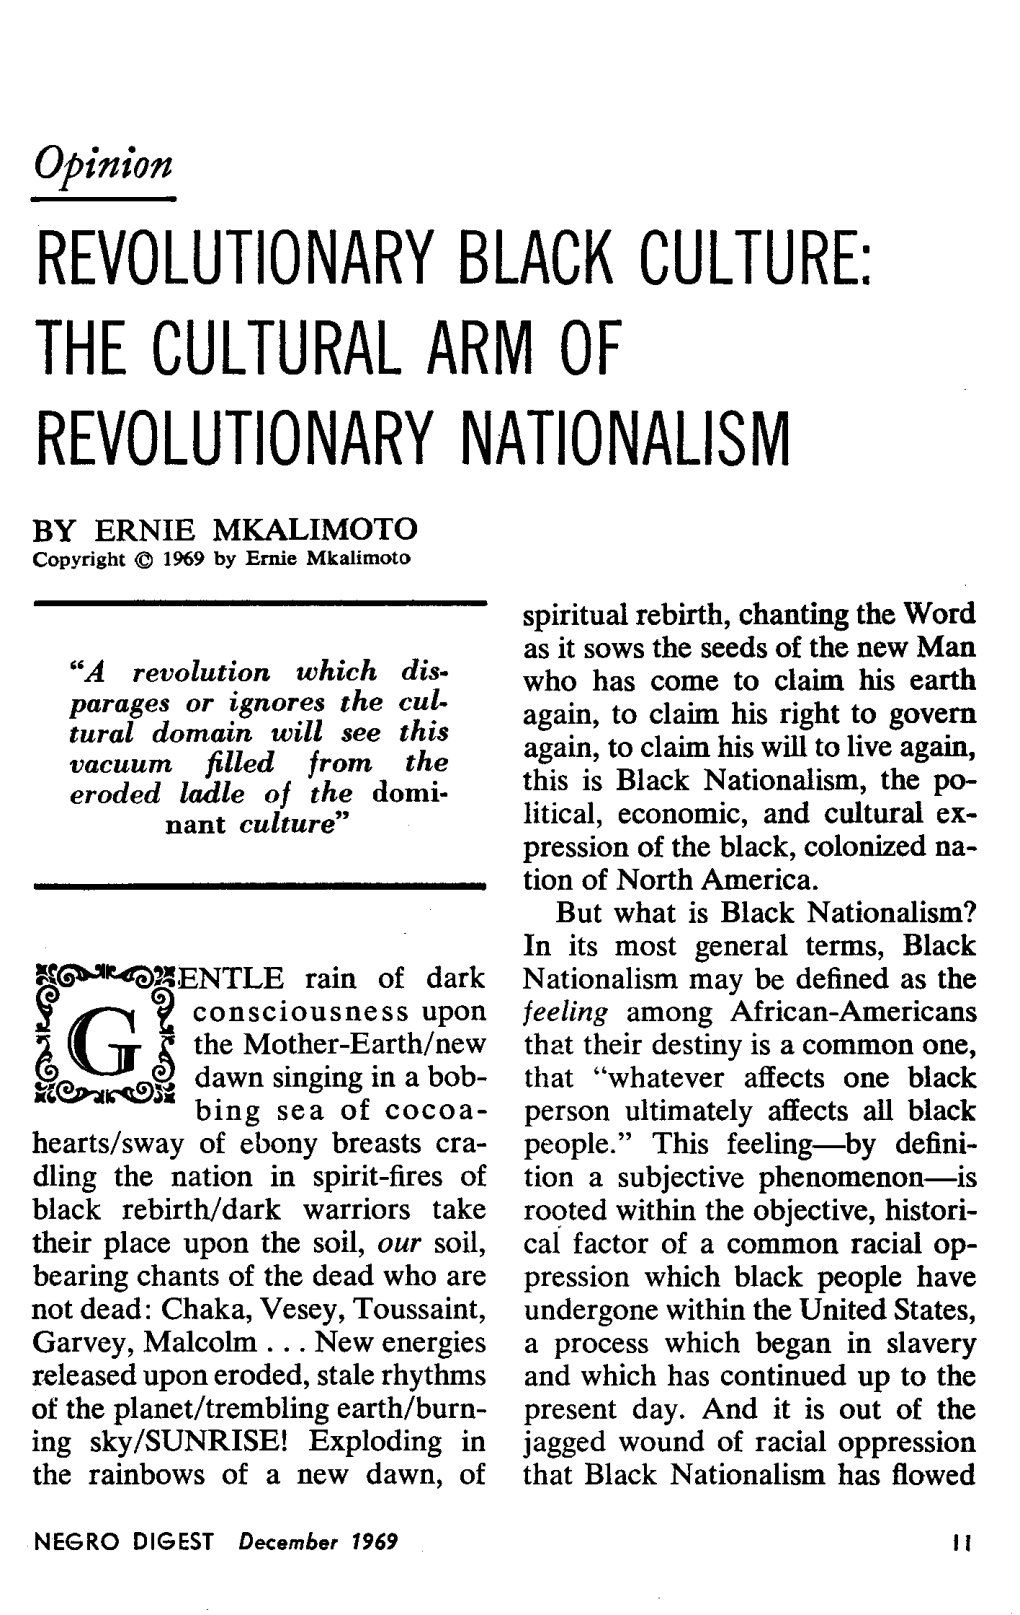 Revolutionary Black Culture: the Cultural Arm of Revolutionary Nationalism